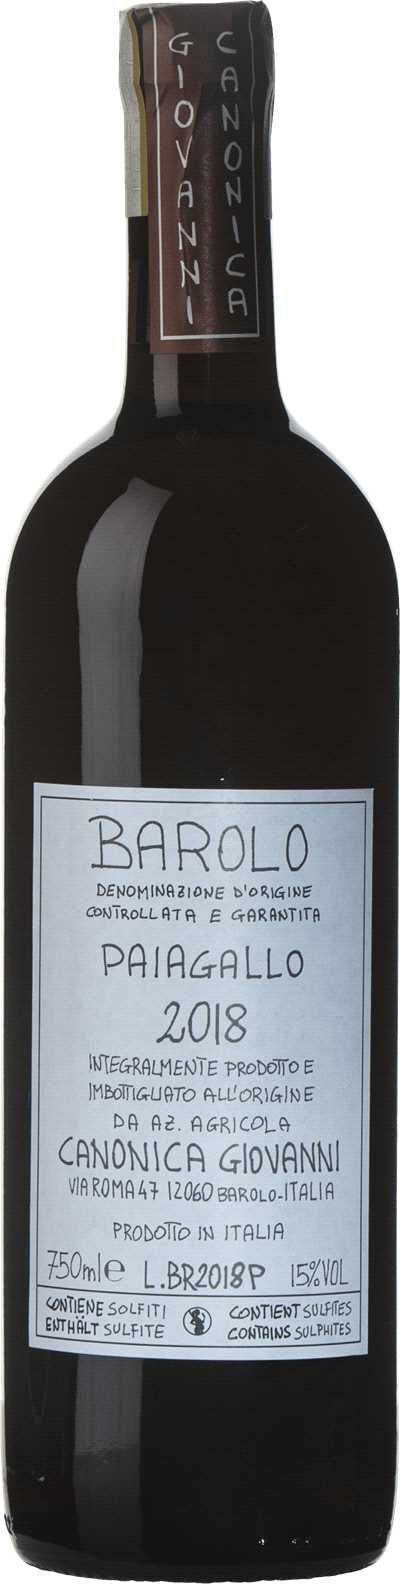 Produktbild för Barolo Paiagallo